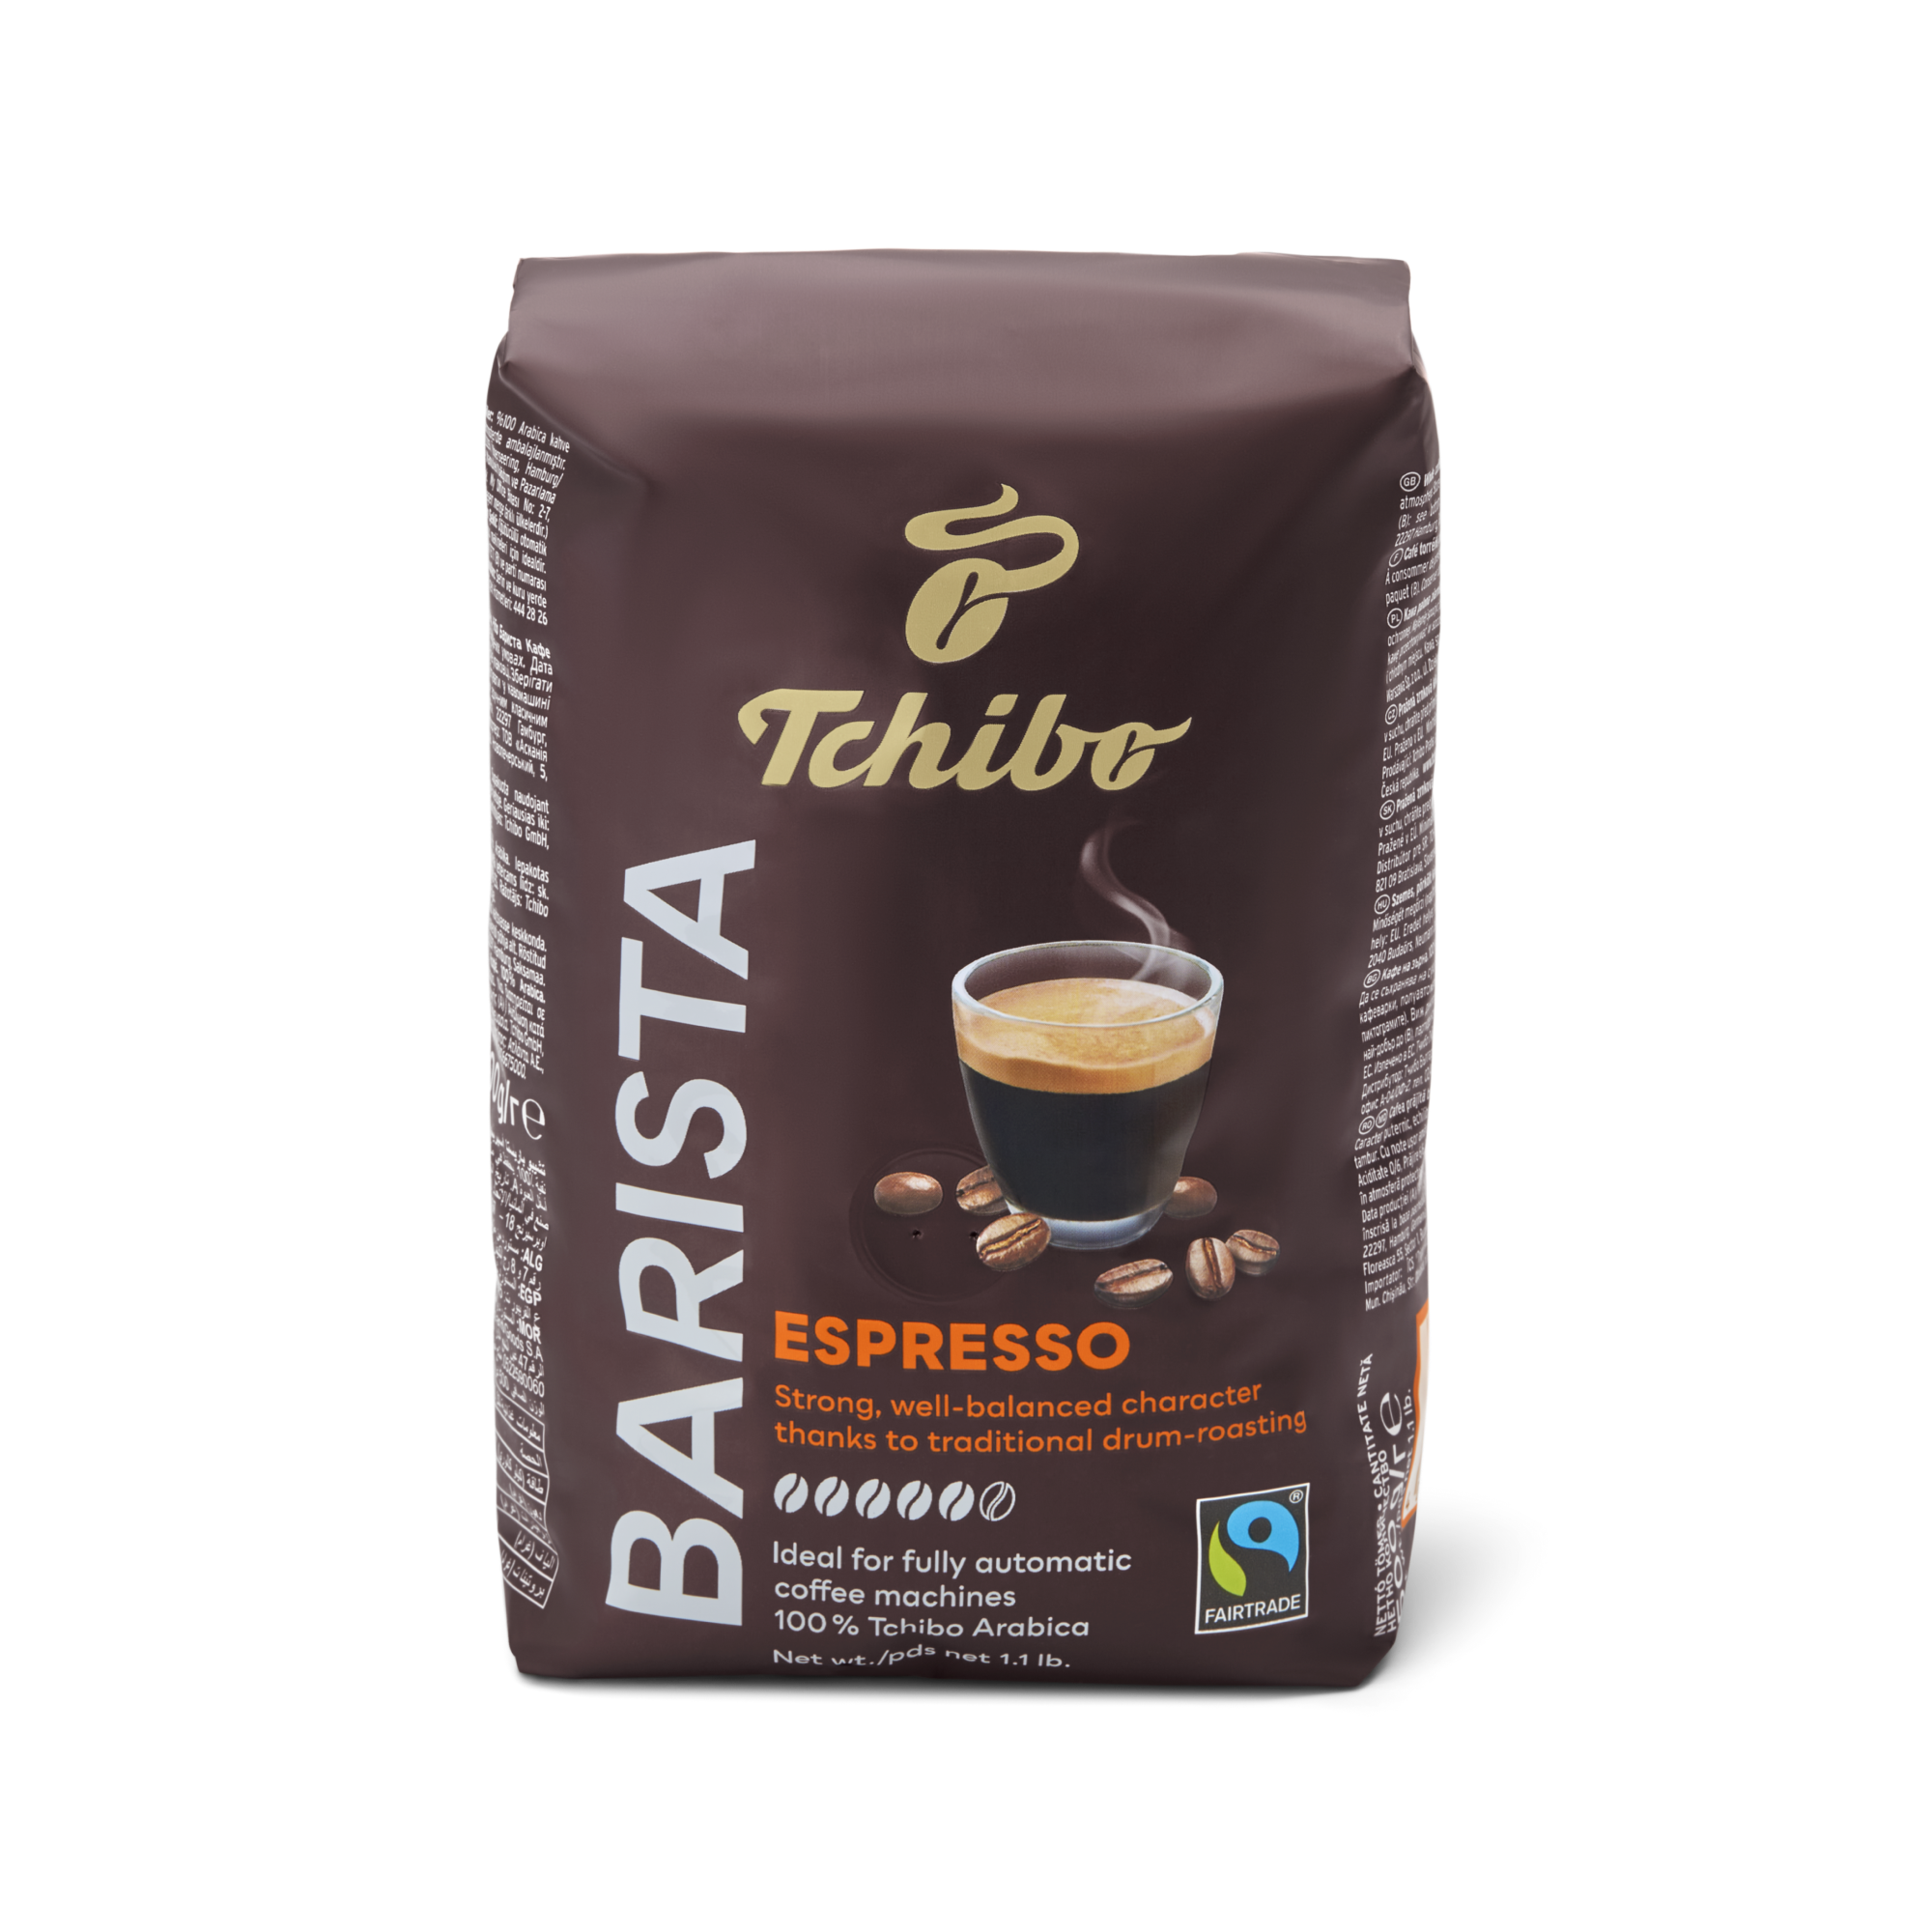 Tchibo begins serving Oatly across its European coffee shops